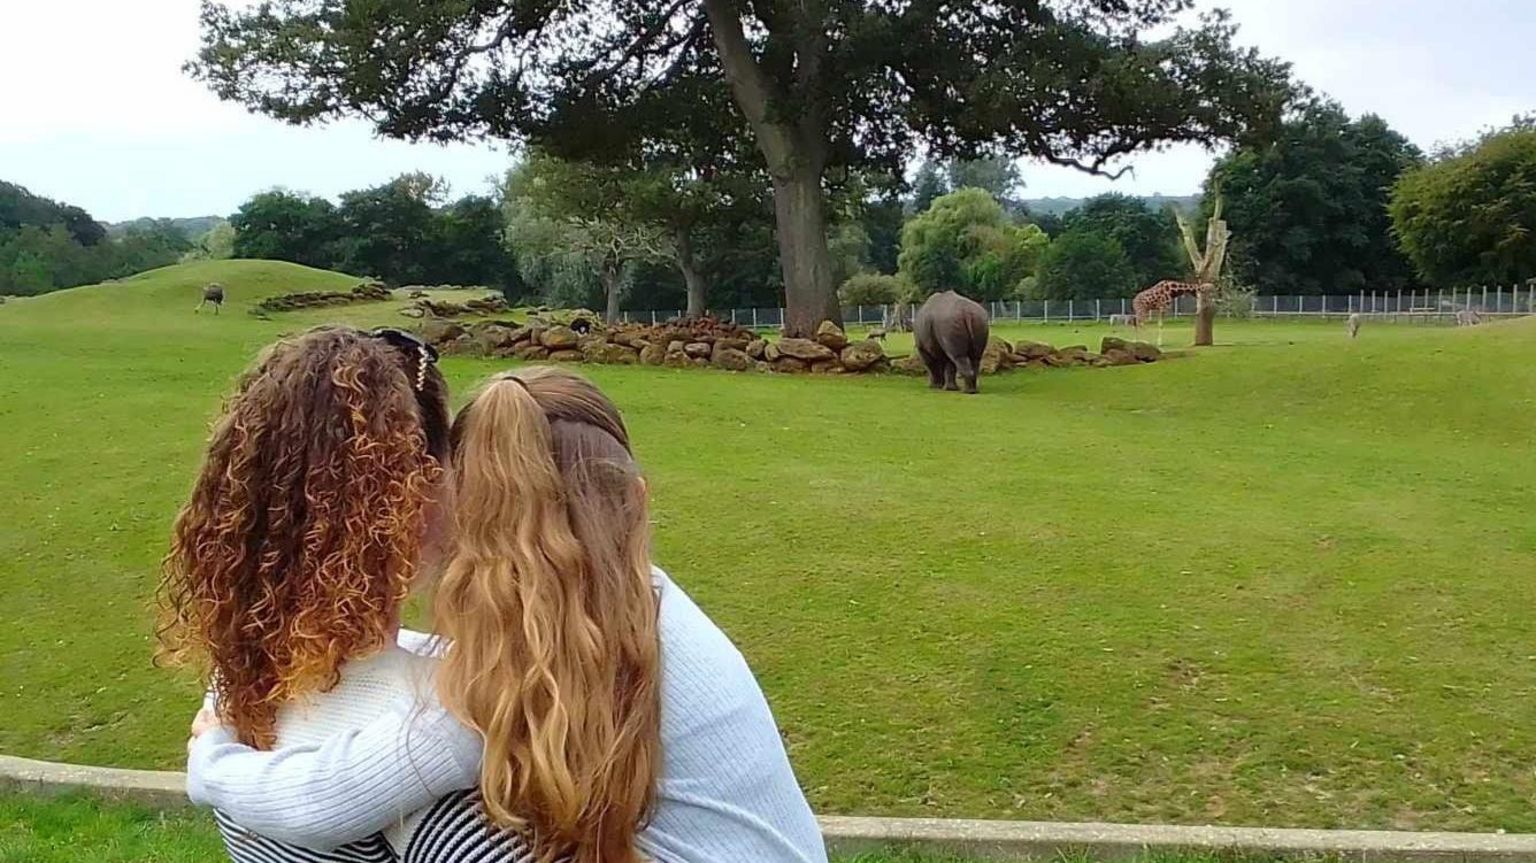 Mum and daughter admiring rhinos at a safari park